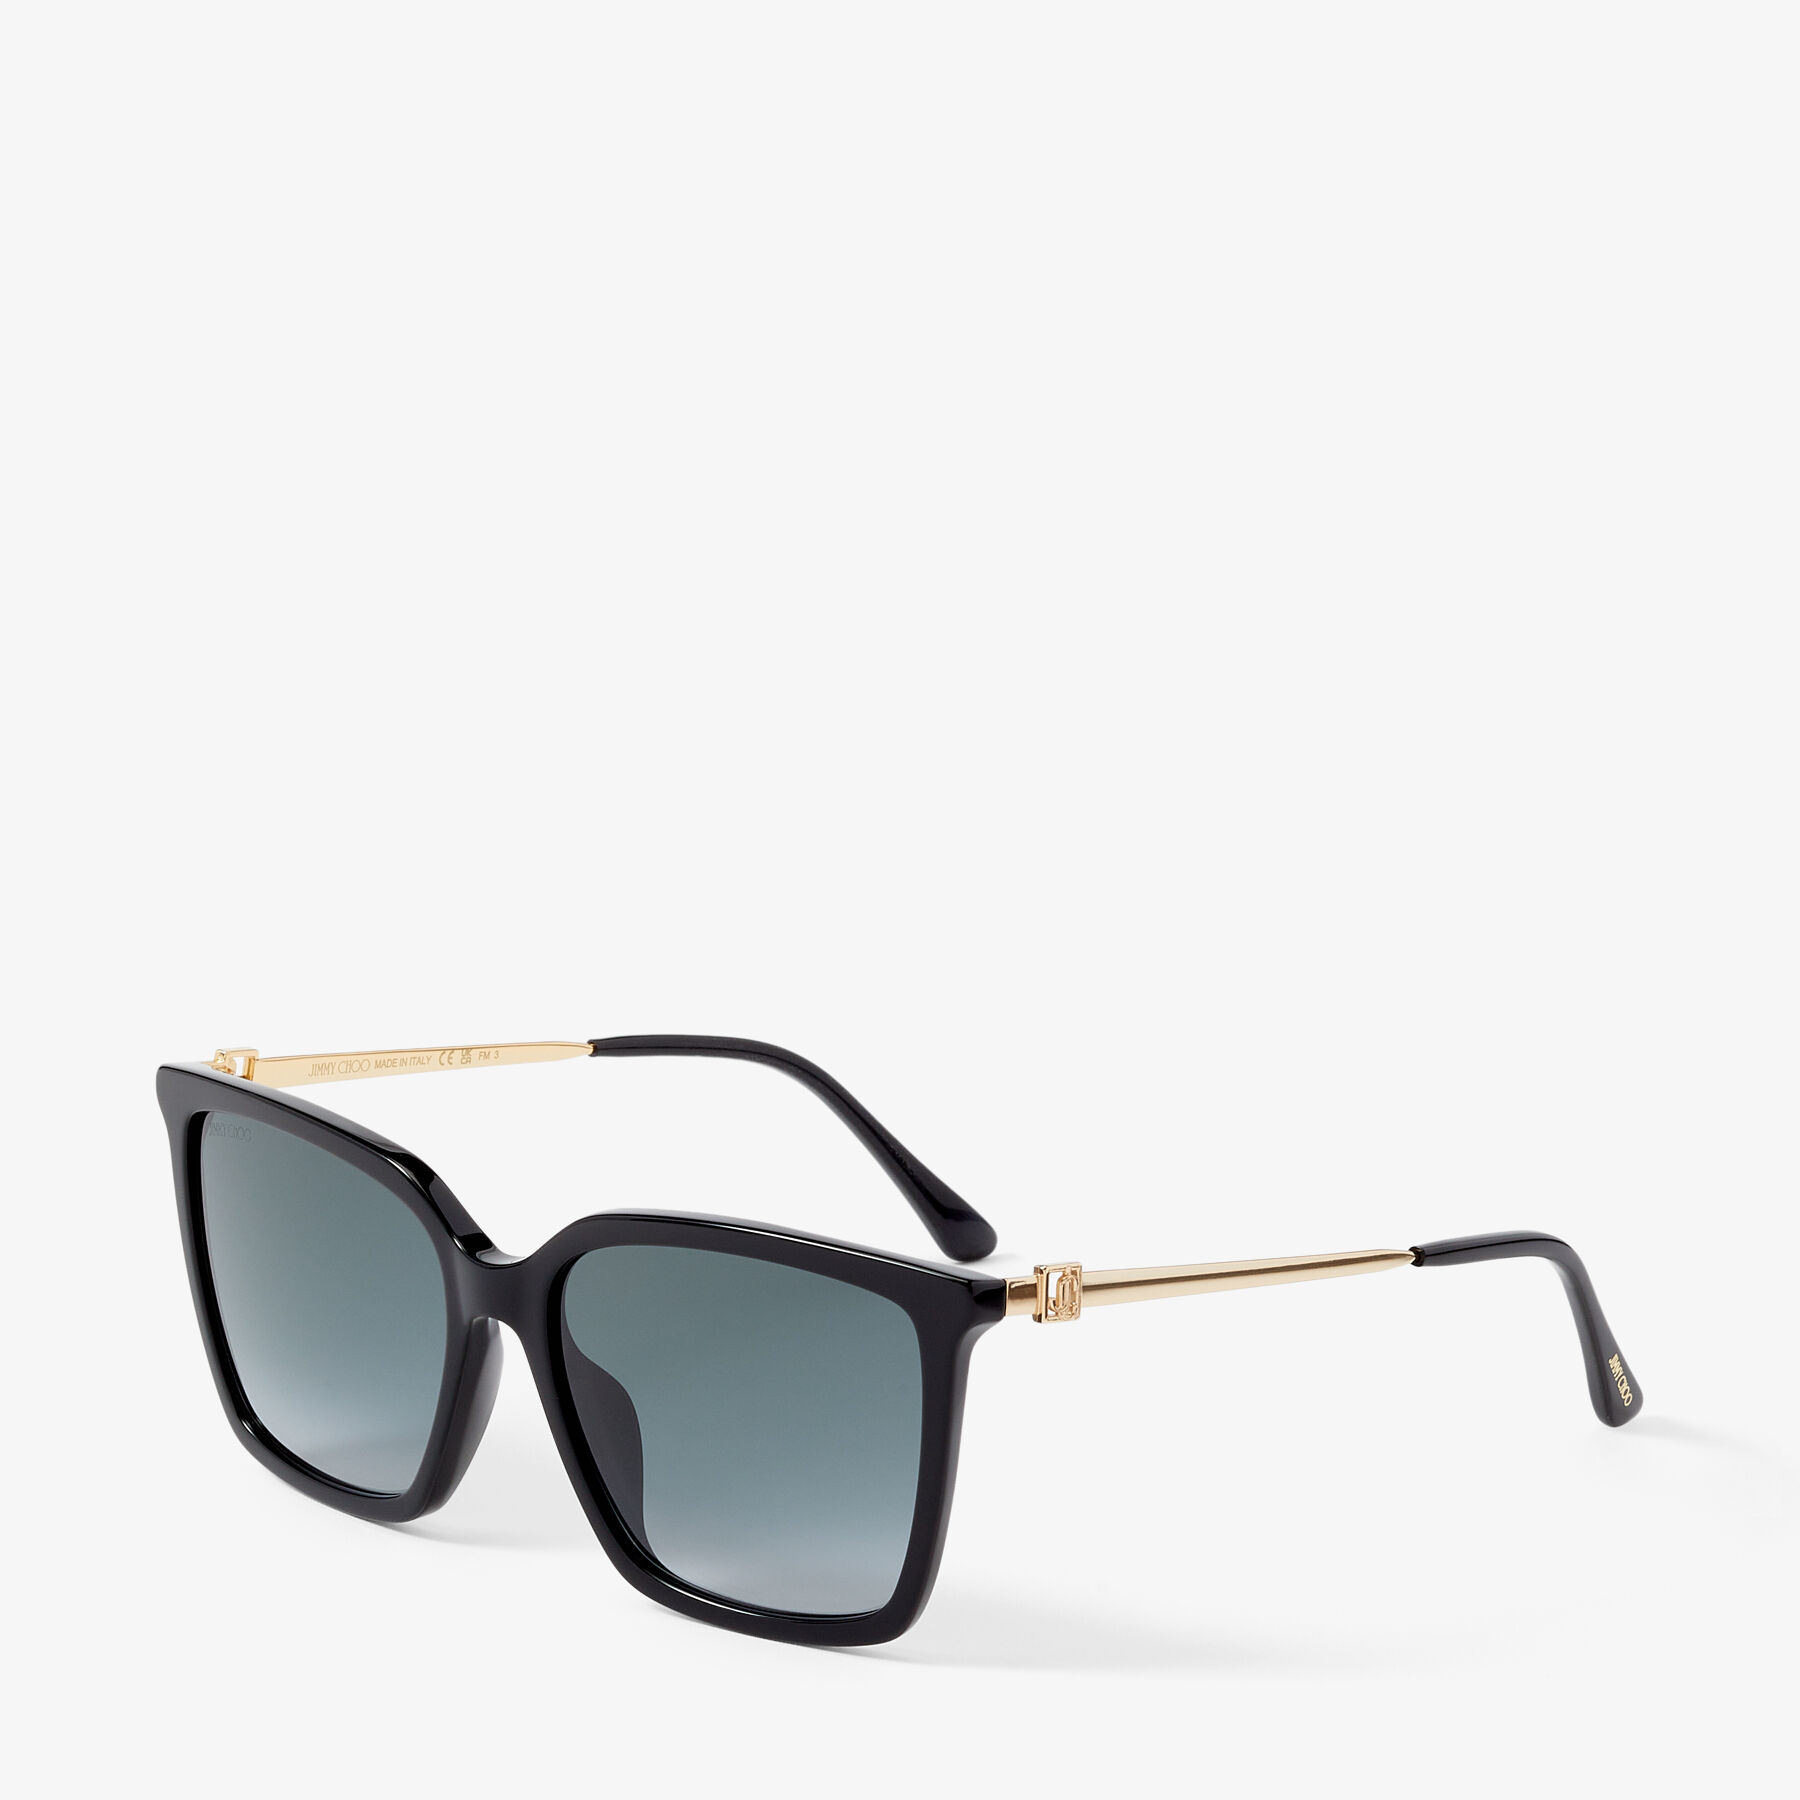 Black Square-Frame Sunglasses with JC Emblem | TOTTA/G/S 56 